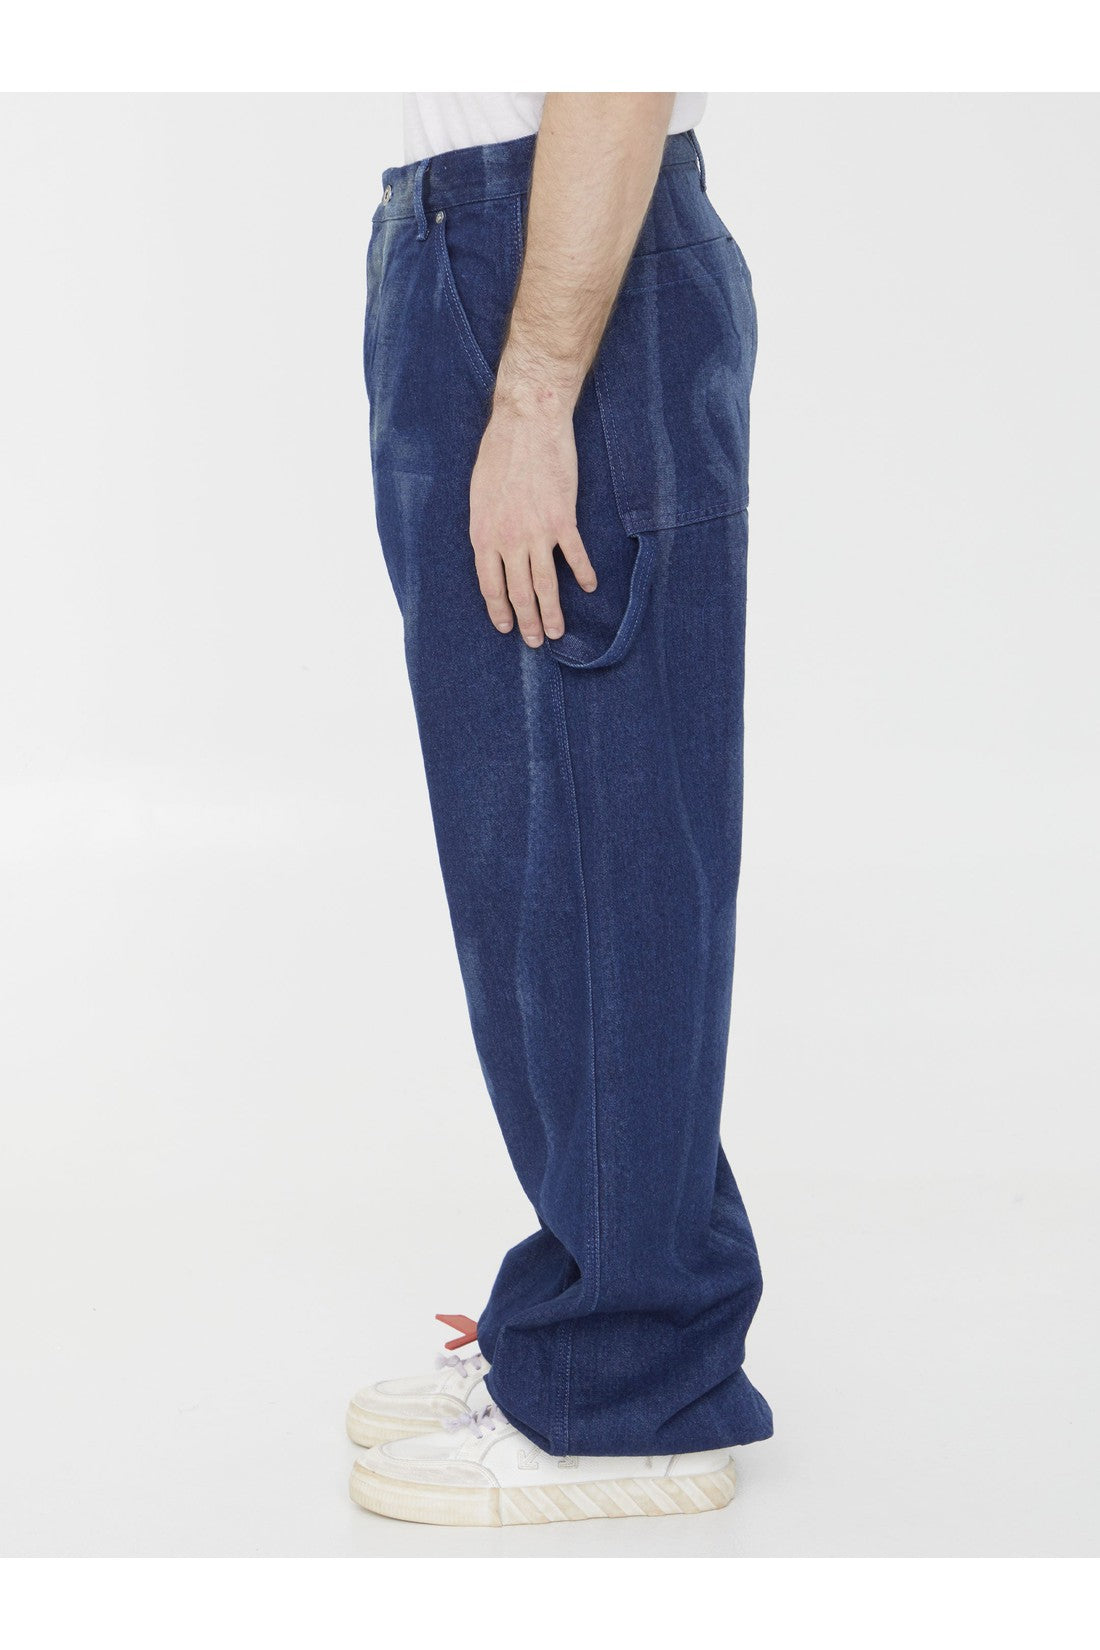 Body Scan oversized jeans